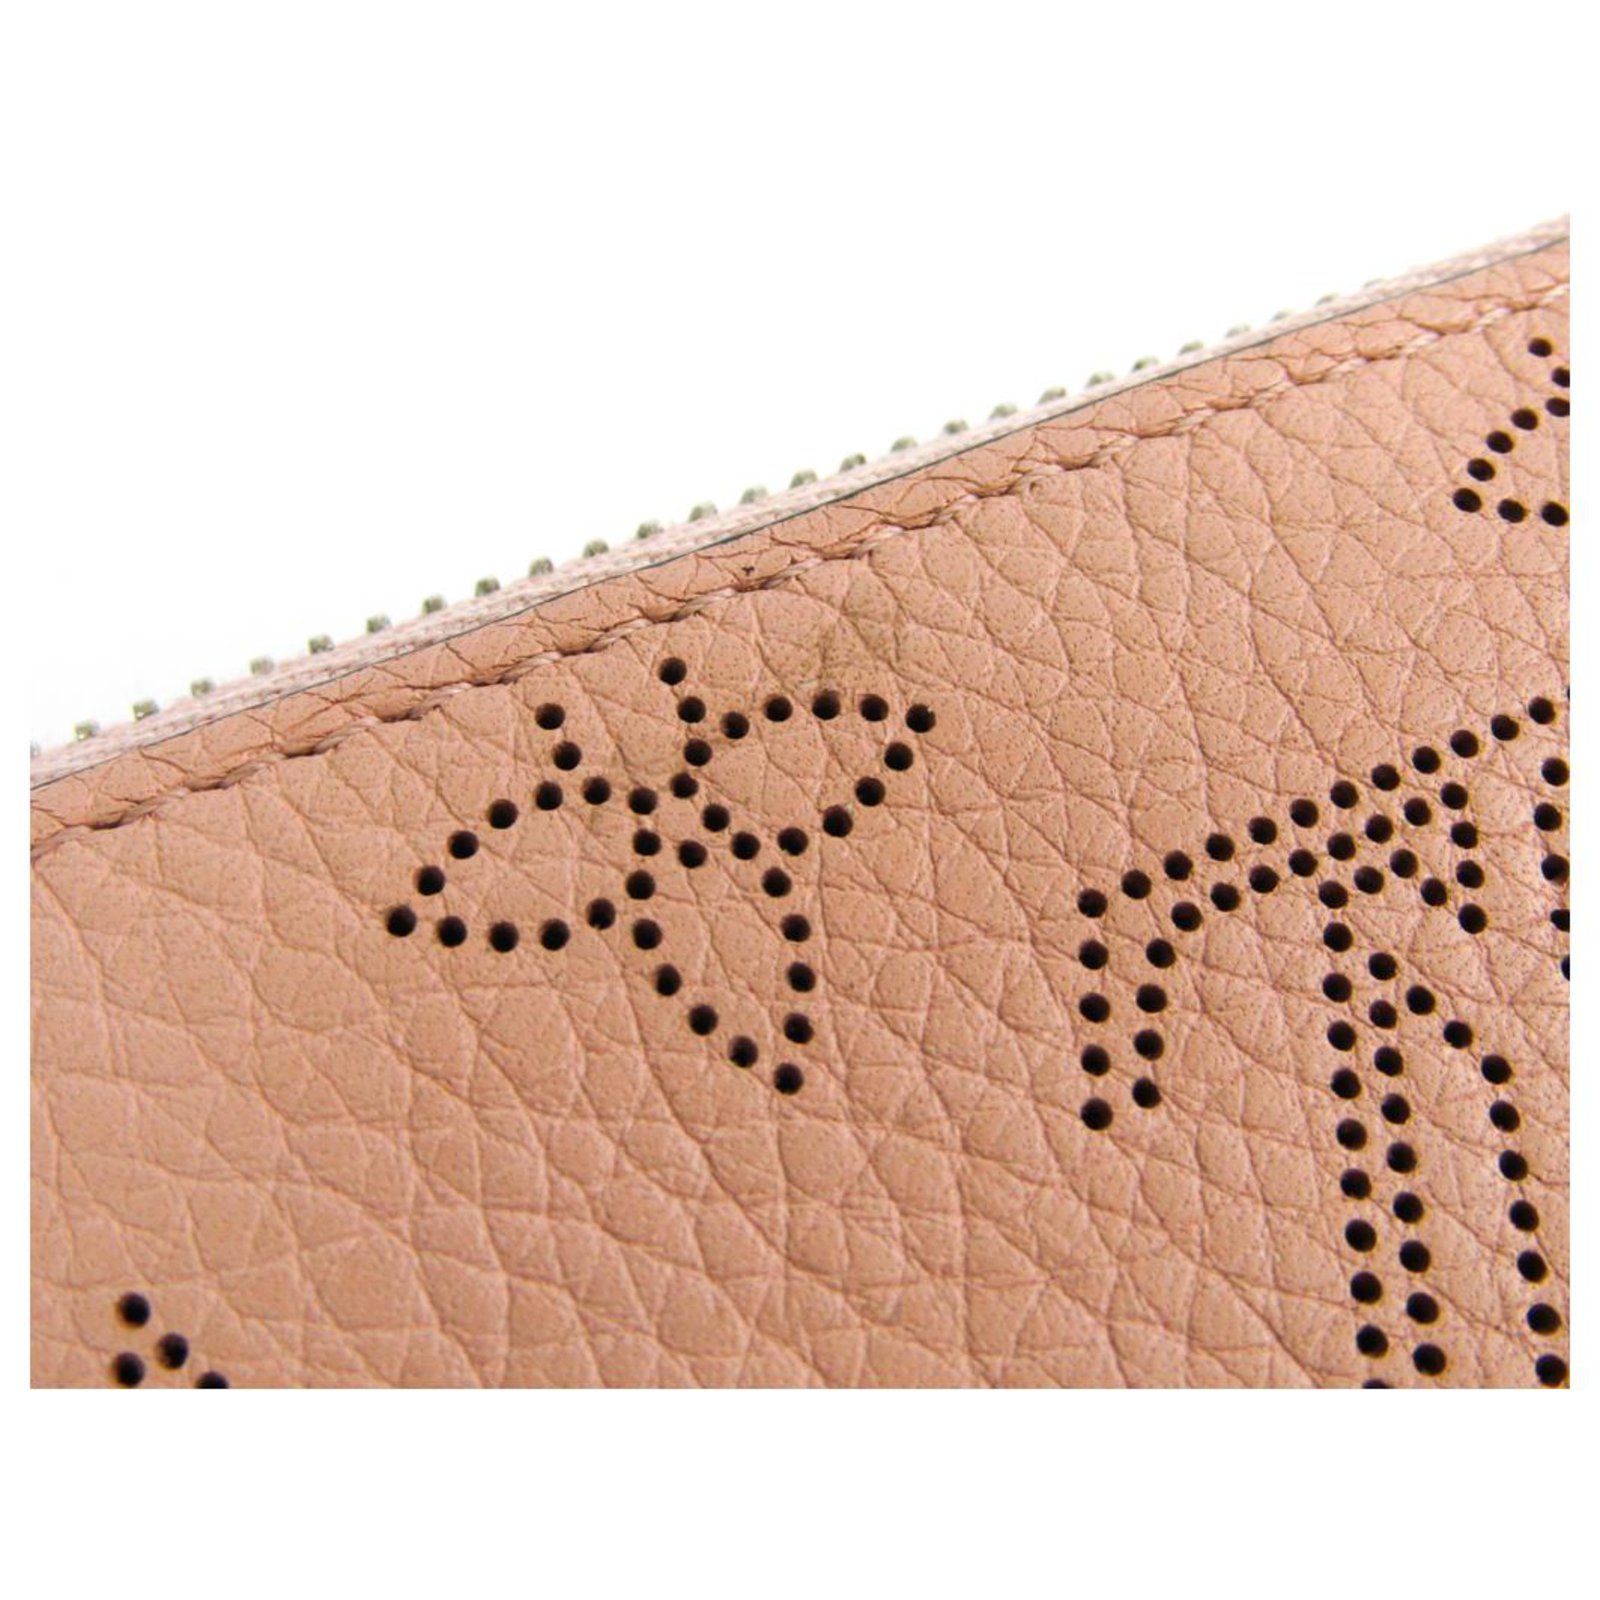 Louis Vuitton Pink Mahina Zippy Wallet Leather Pony-style calfskin